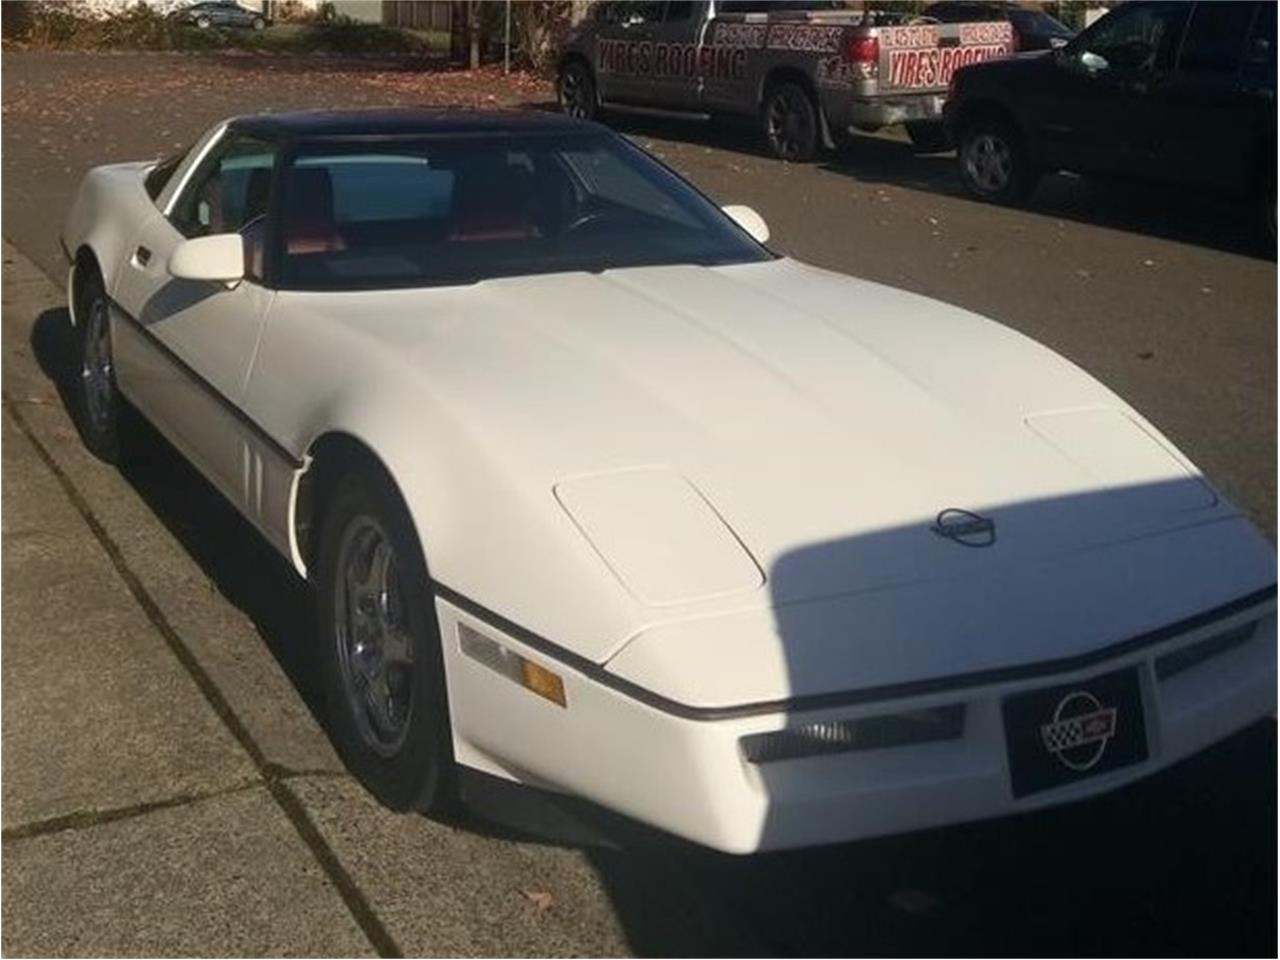 1985 Chevrolet Corvette C4 for sale in Everett, WA